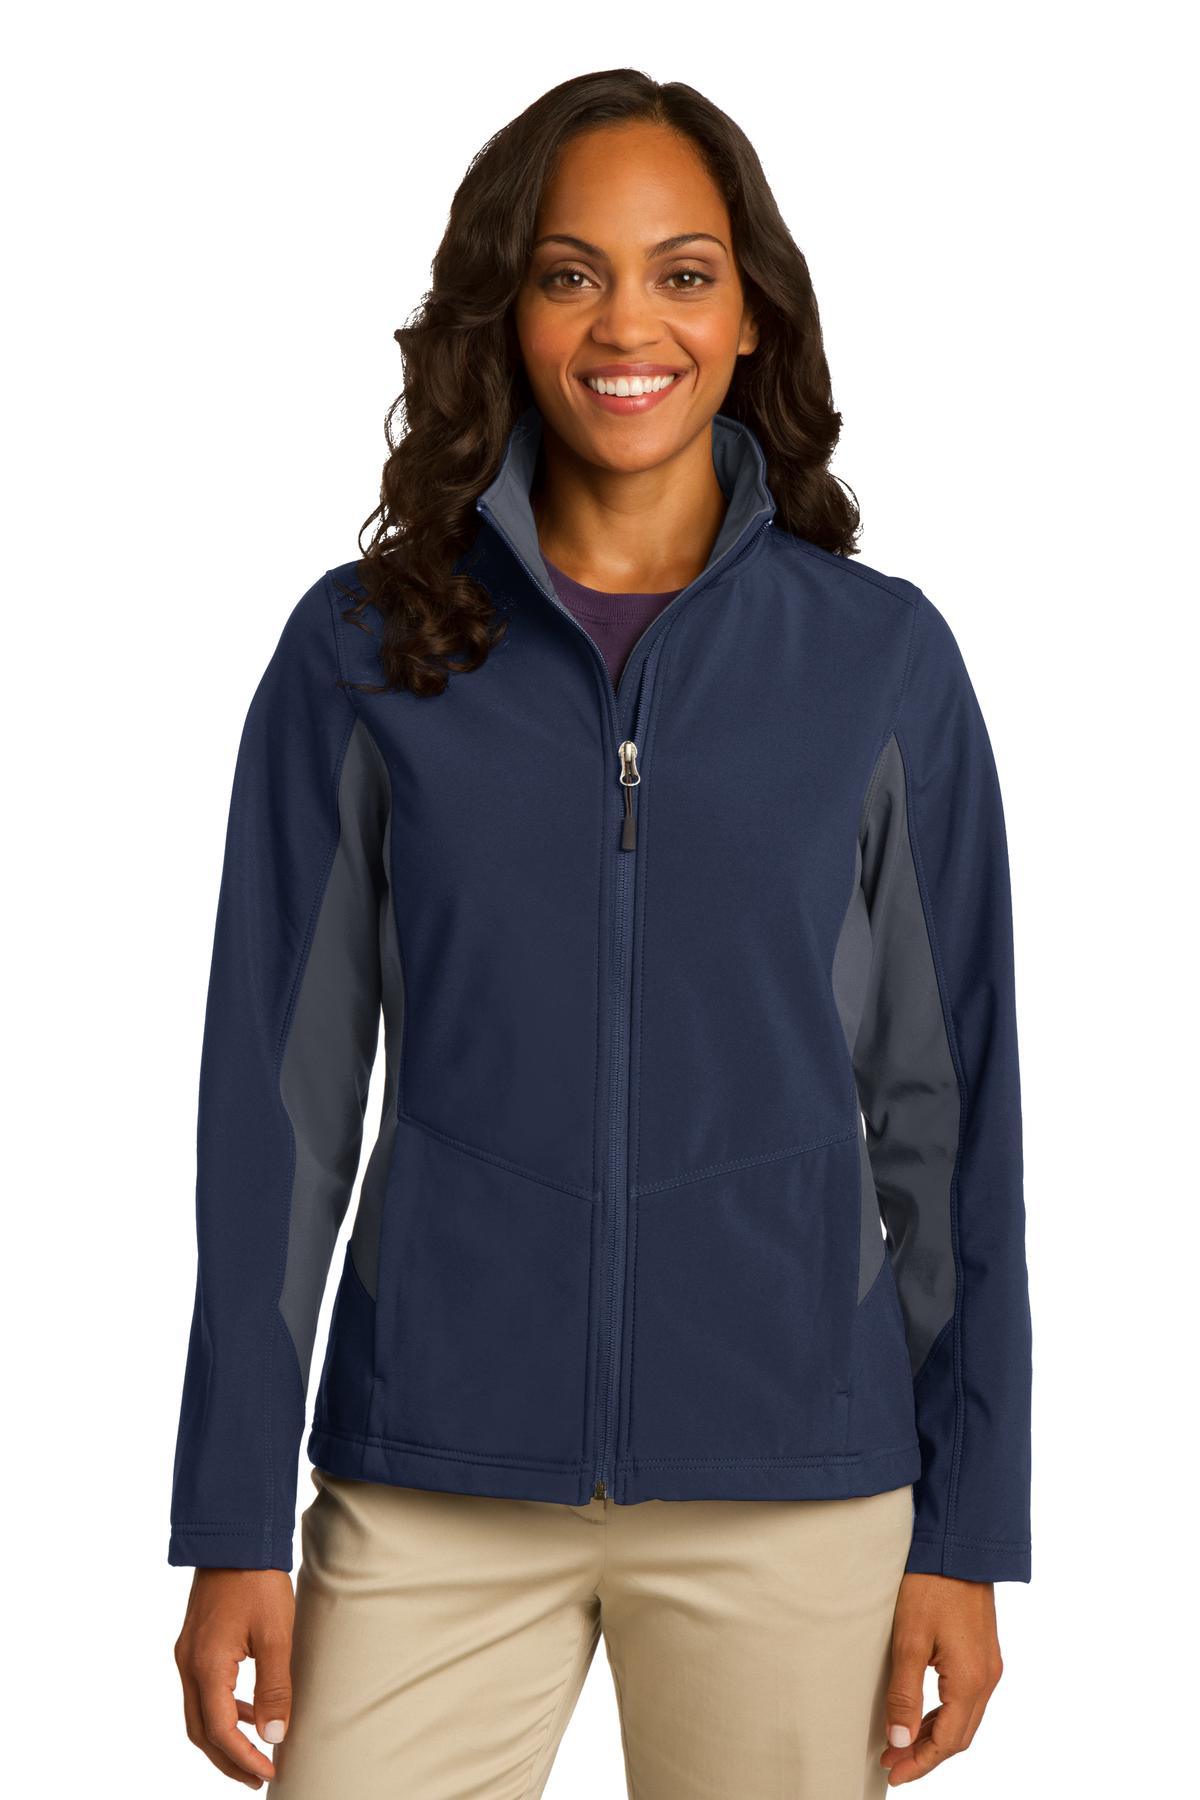 Port Authority Ladies Core Colorblock Soft Shell Jacket. L318 - Dresses Max